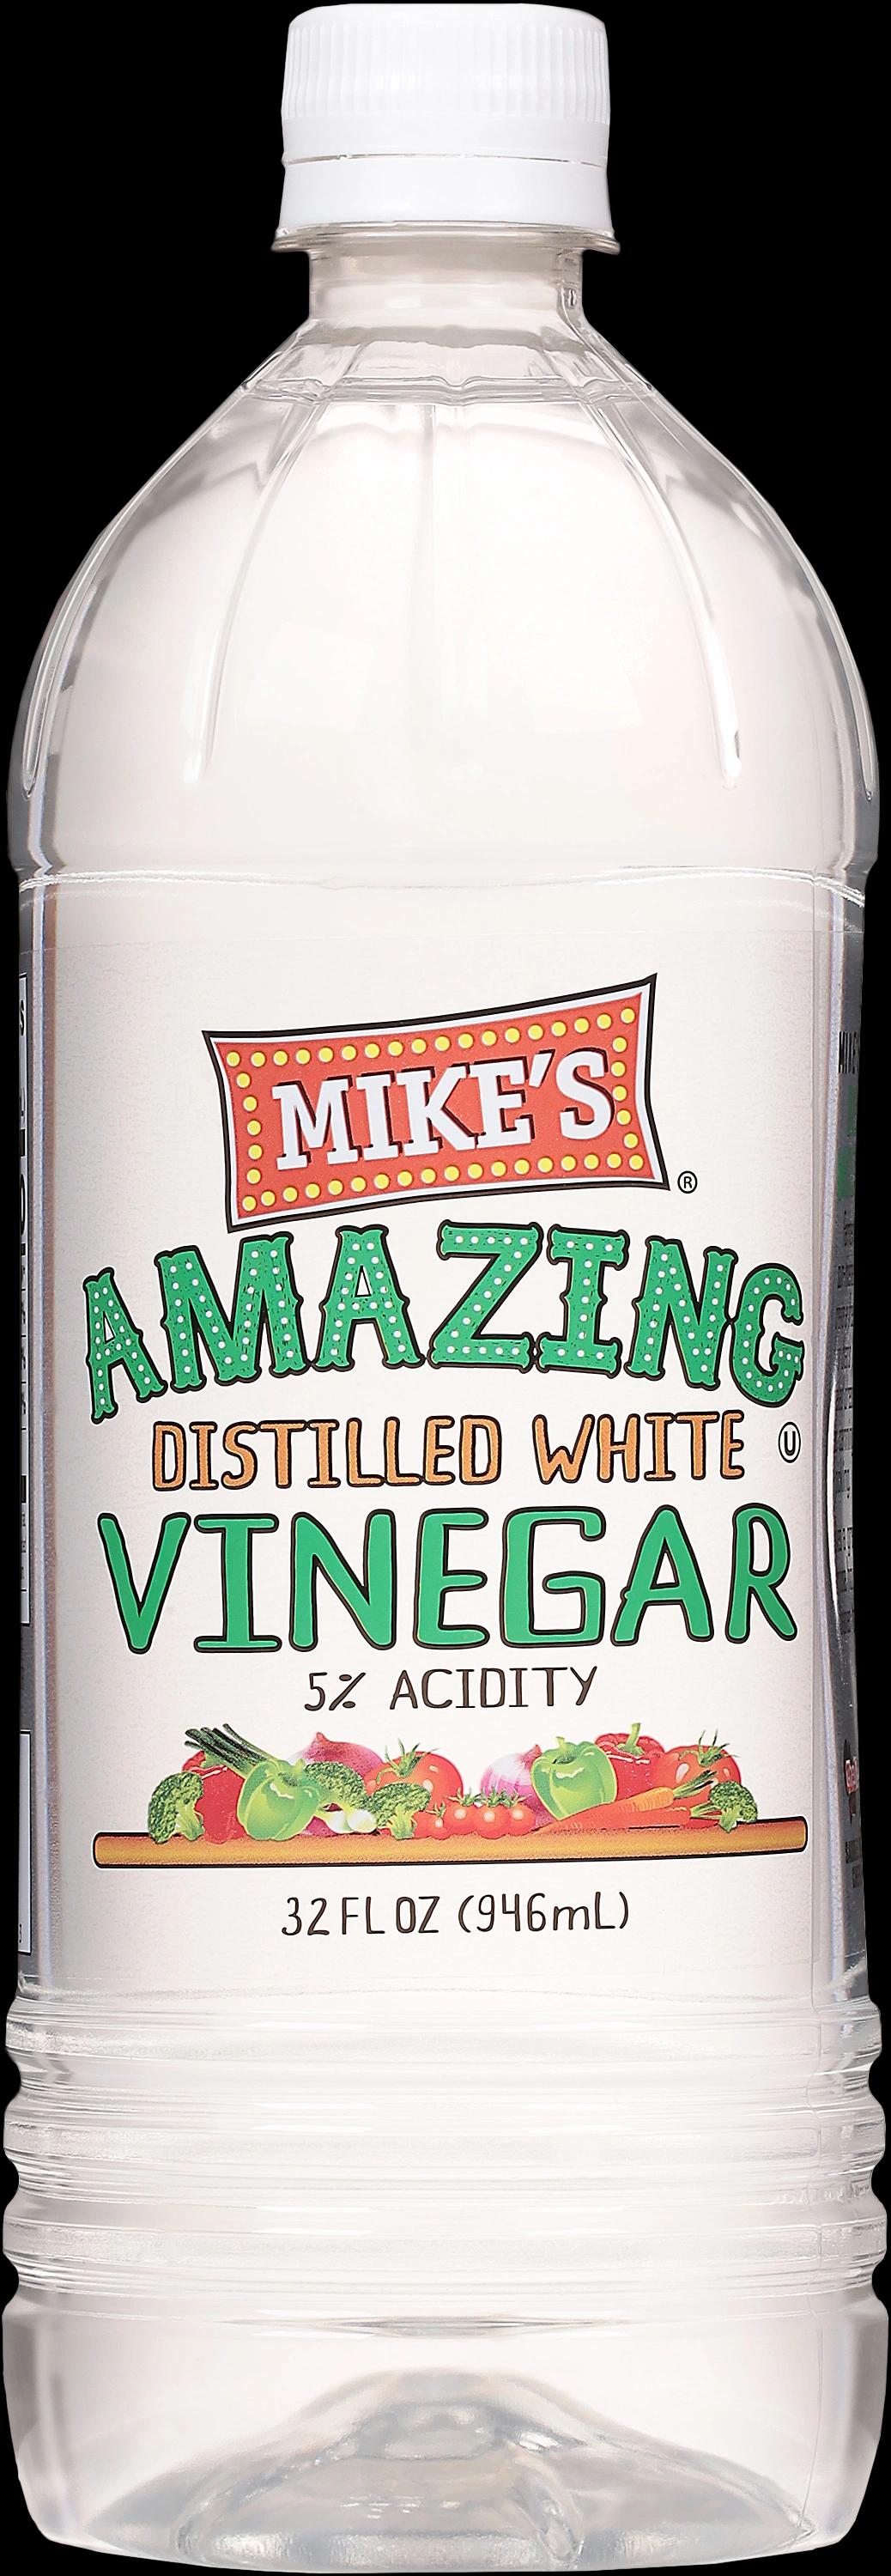 A 32oz bottle of Mike's Amazing distilled white vinegar.